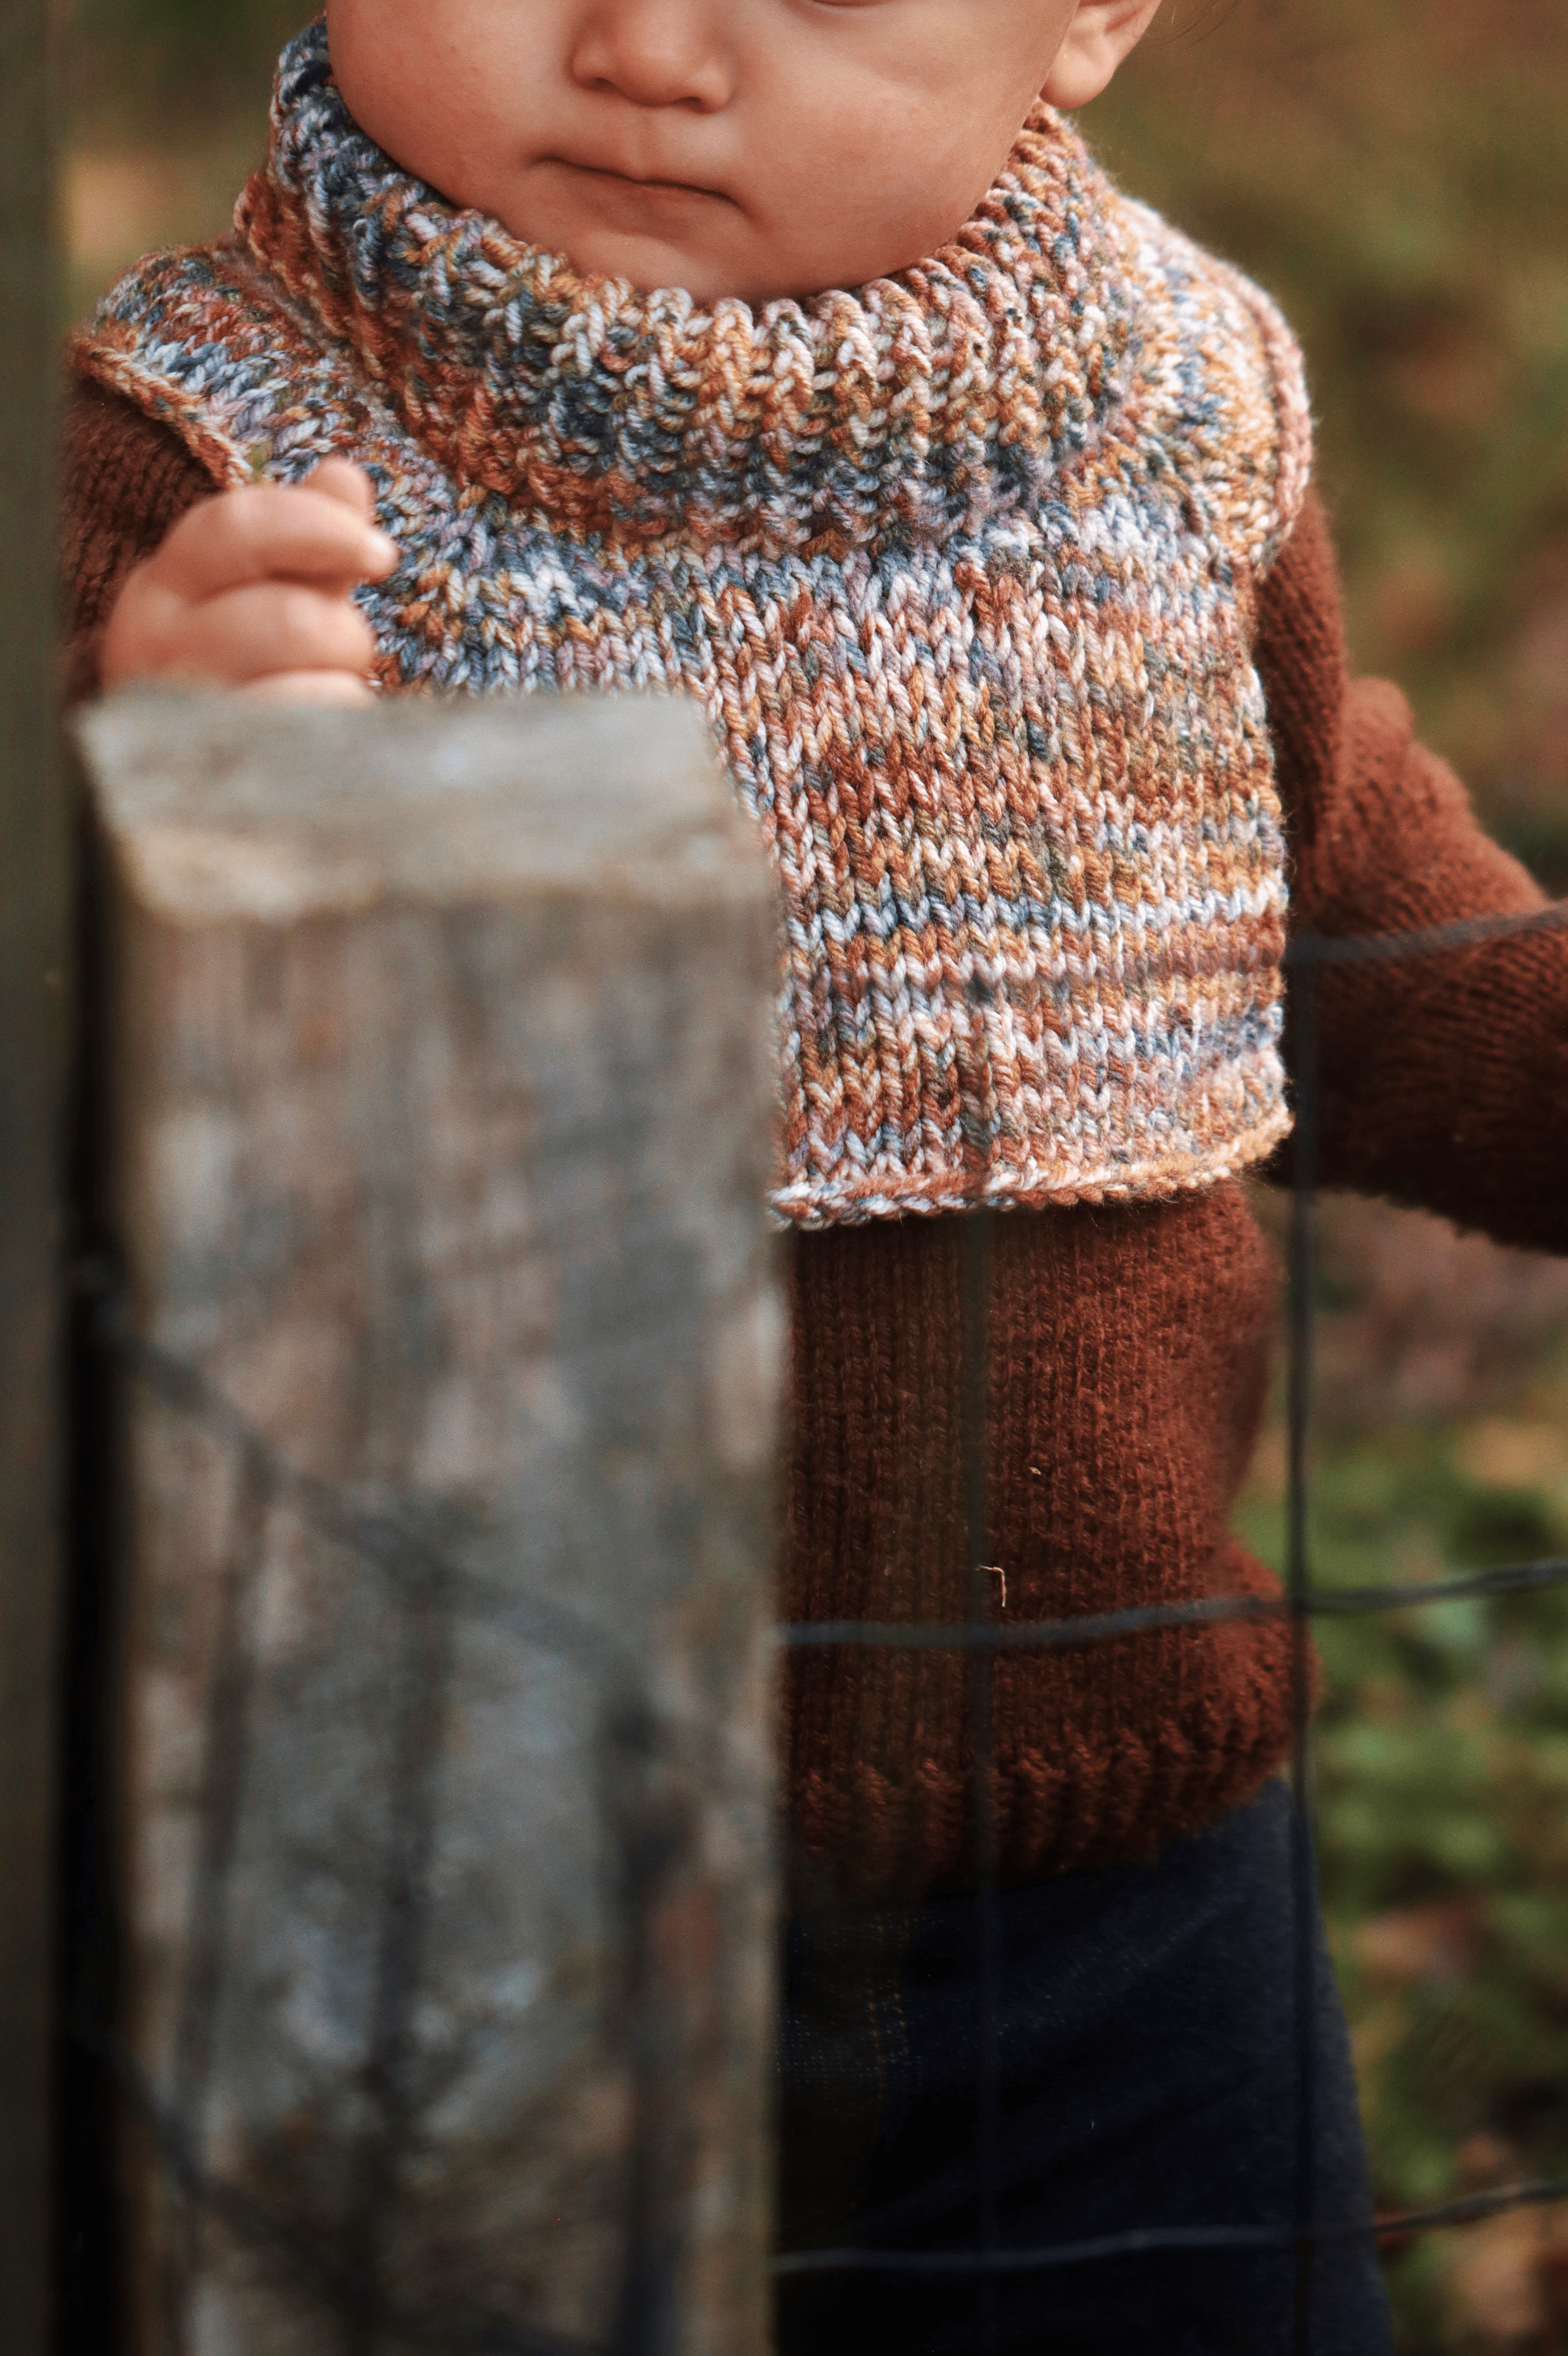 Chunky Blanket Throw Crochet Pattern by Darling Jadore, Fireside Throw